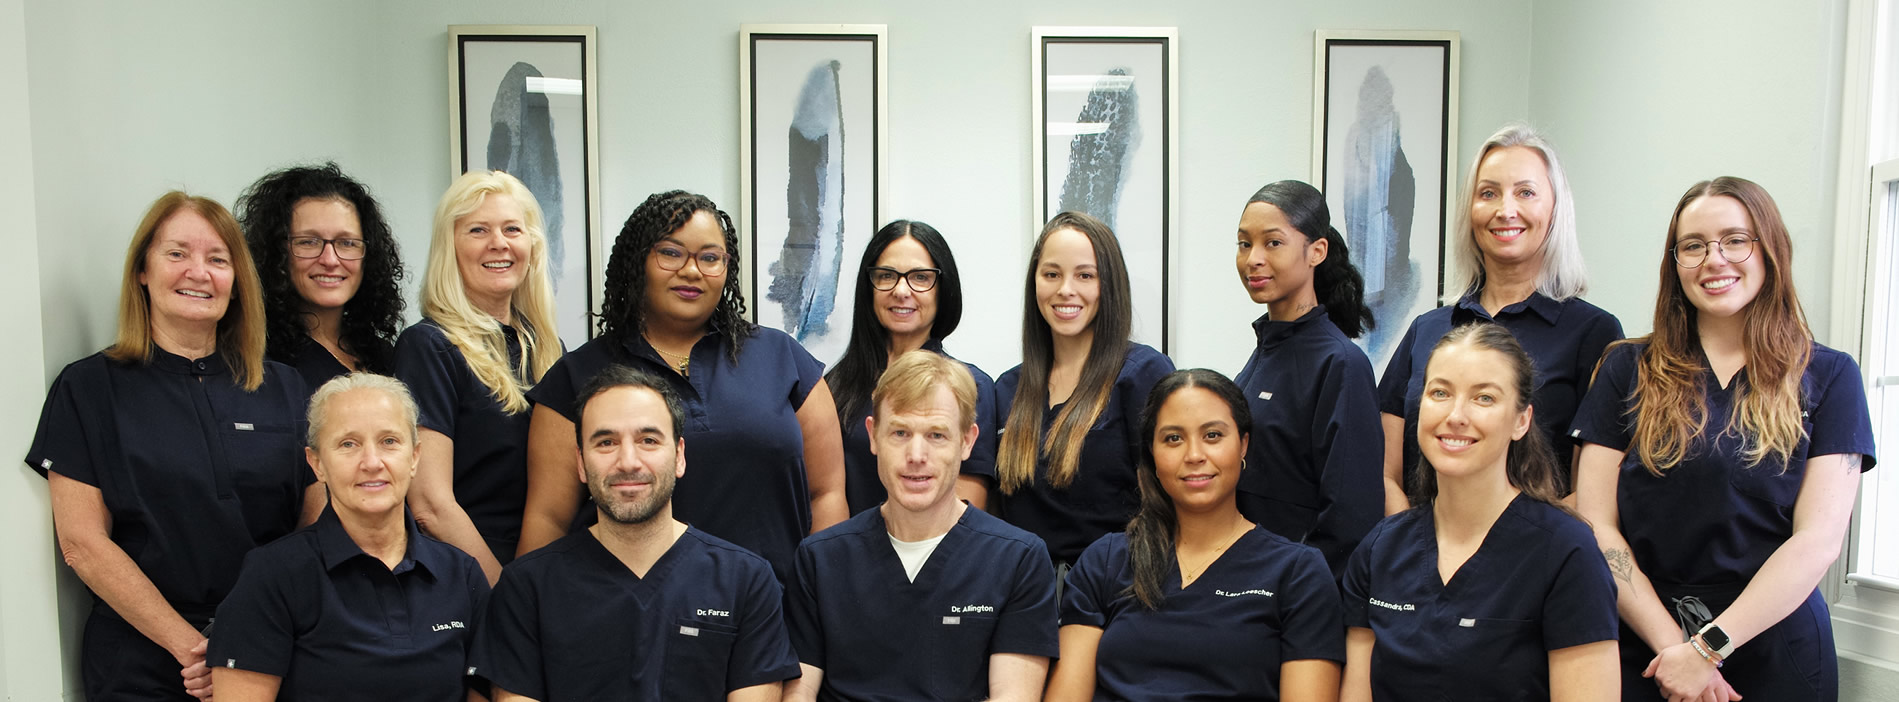 Dr. Allington and His Staff, Positive Image Dental - Devonshire, Bermuda